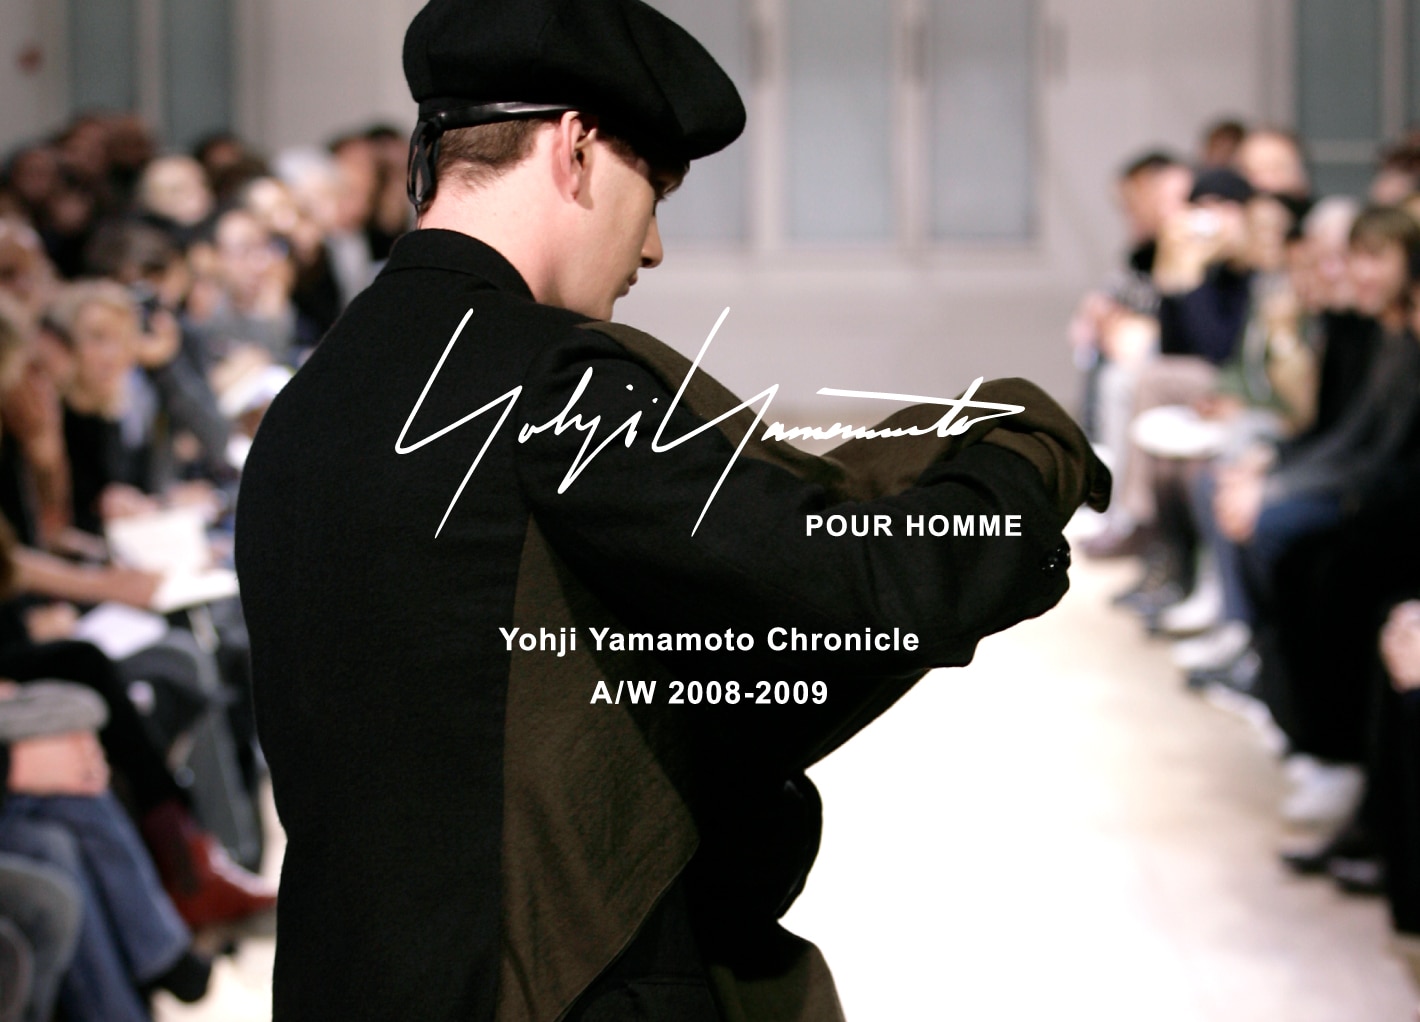 Yohji Yamamoto Chronicle – POUR HOMME AW 2008-2009